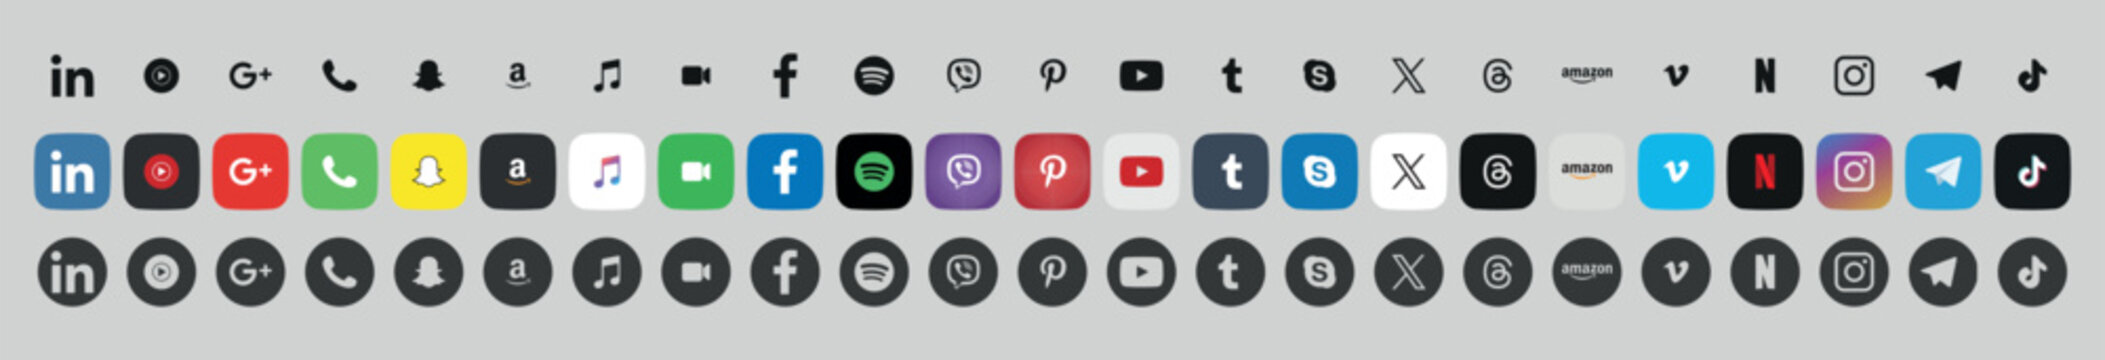 Social media logo icons set vector. Instagram, facebook, tiktok, snapchat, twitter, youtube, spotify, linkedin, telegram, whatsapp, pinterest, vimeo, discord, twitch, tumblr, skype, messenger